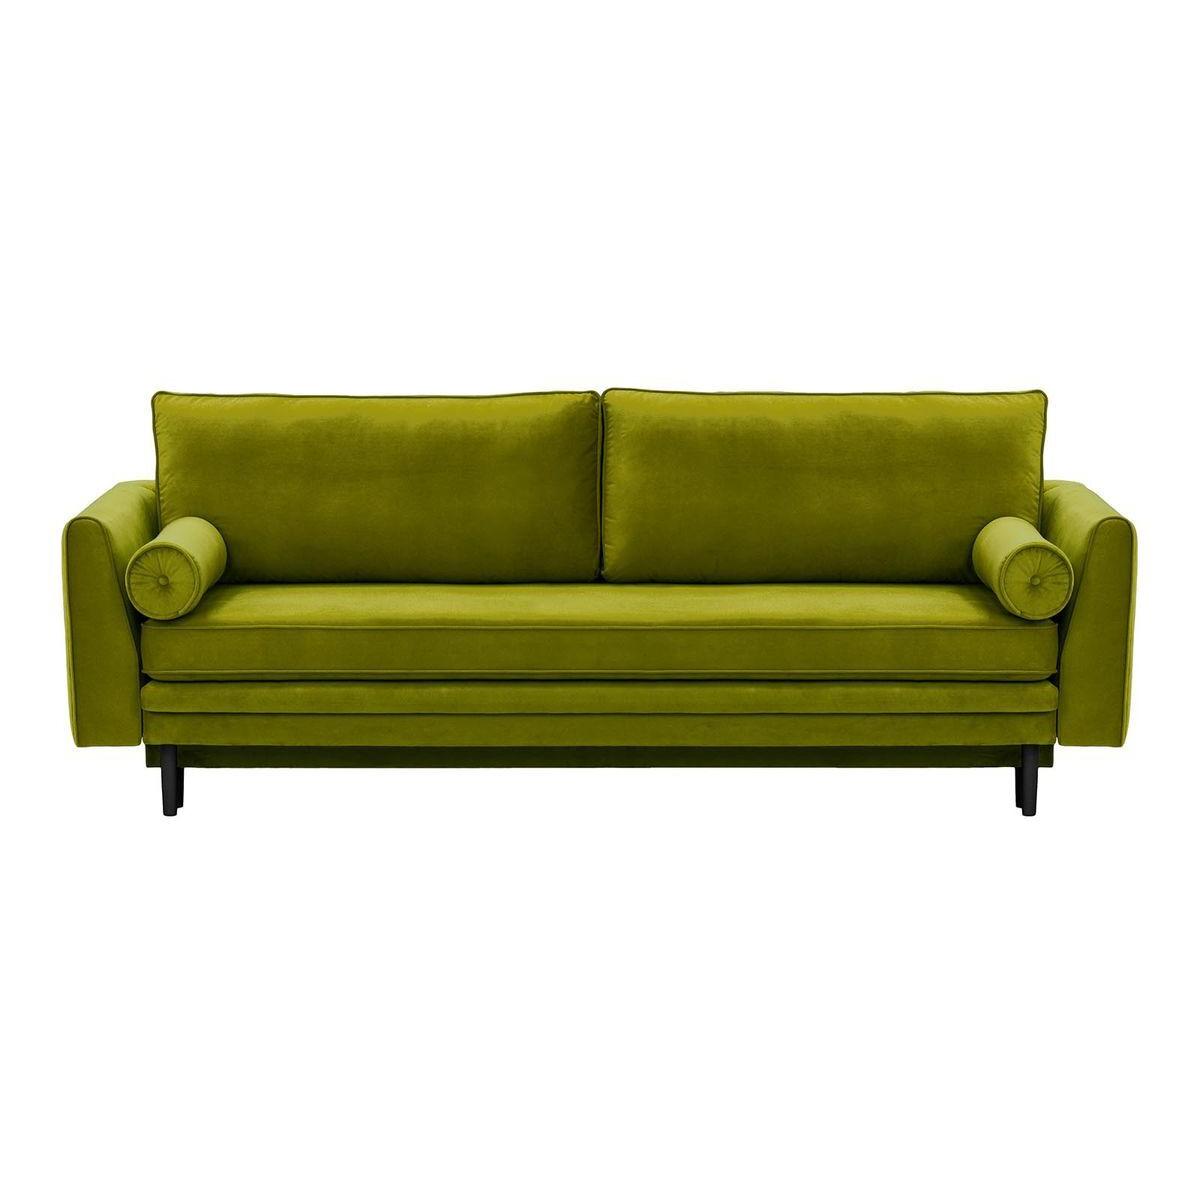 Boris Sofa Bed with Storage, olive green, Leg colour: black - image 1